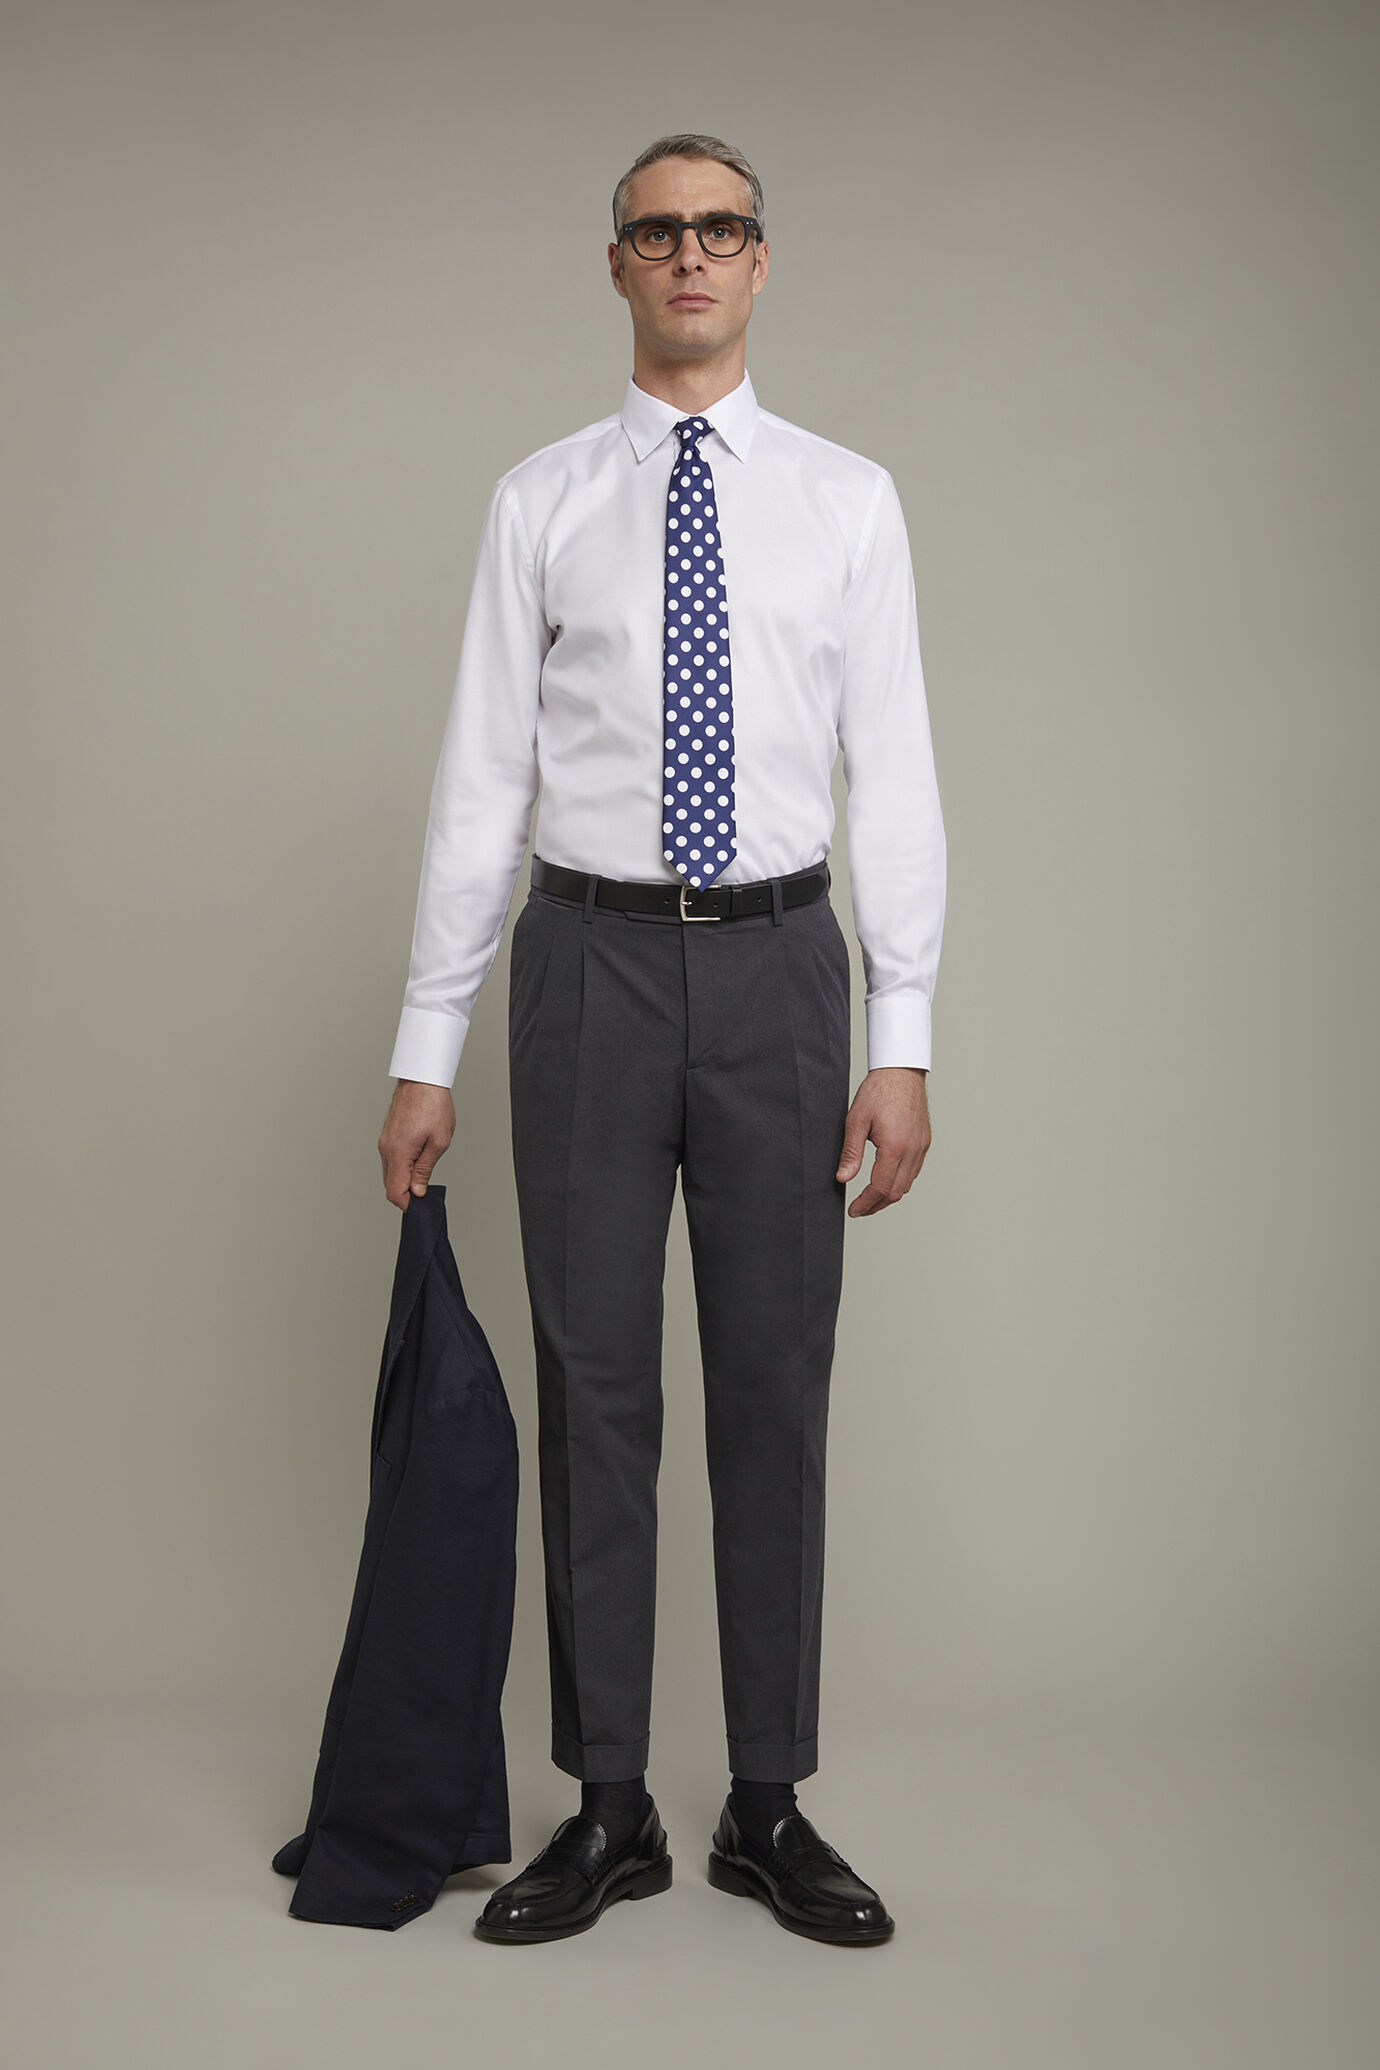 Men's shirt classic collar 100% cotton lightweight oxford fabric regular fit image number 0